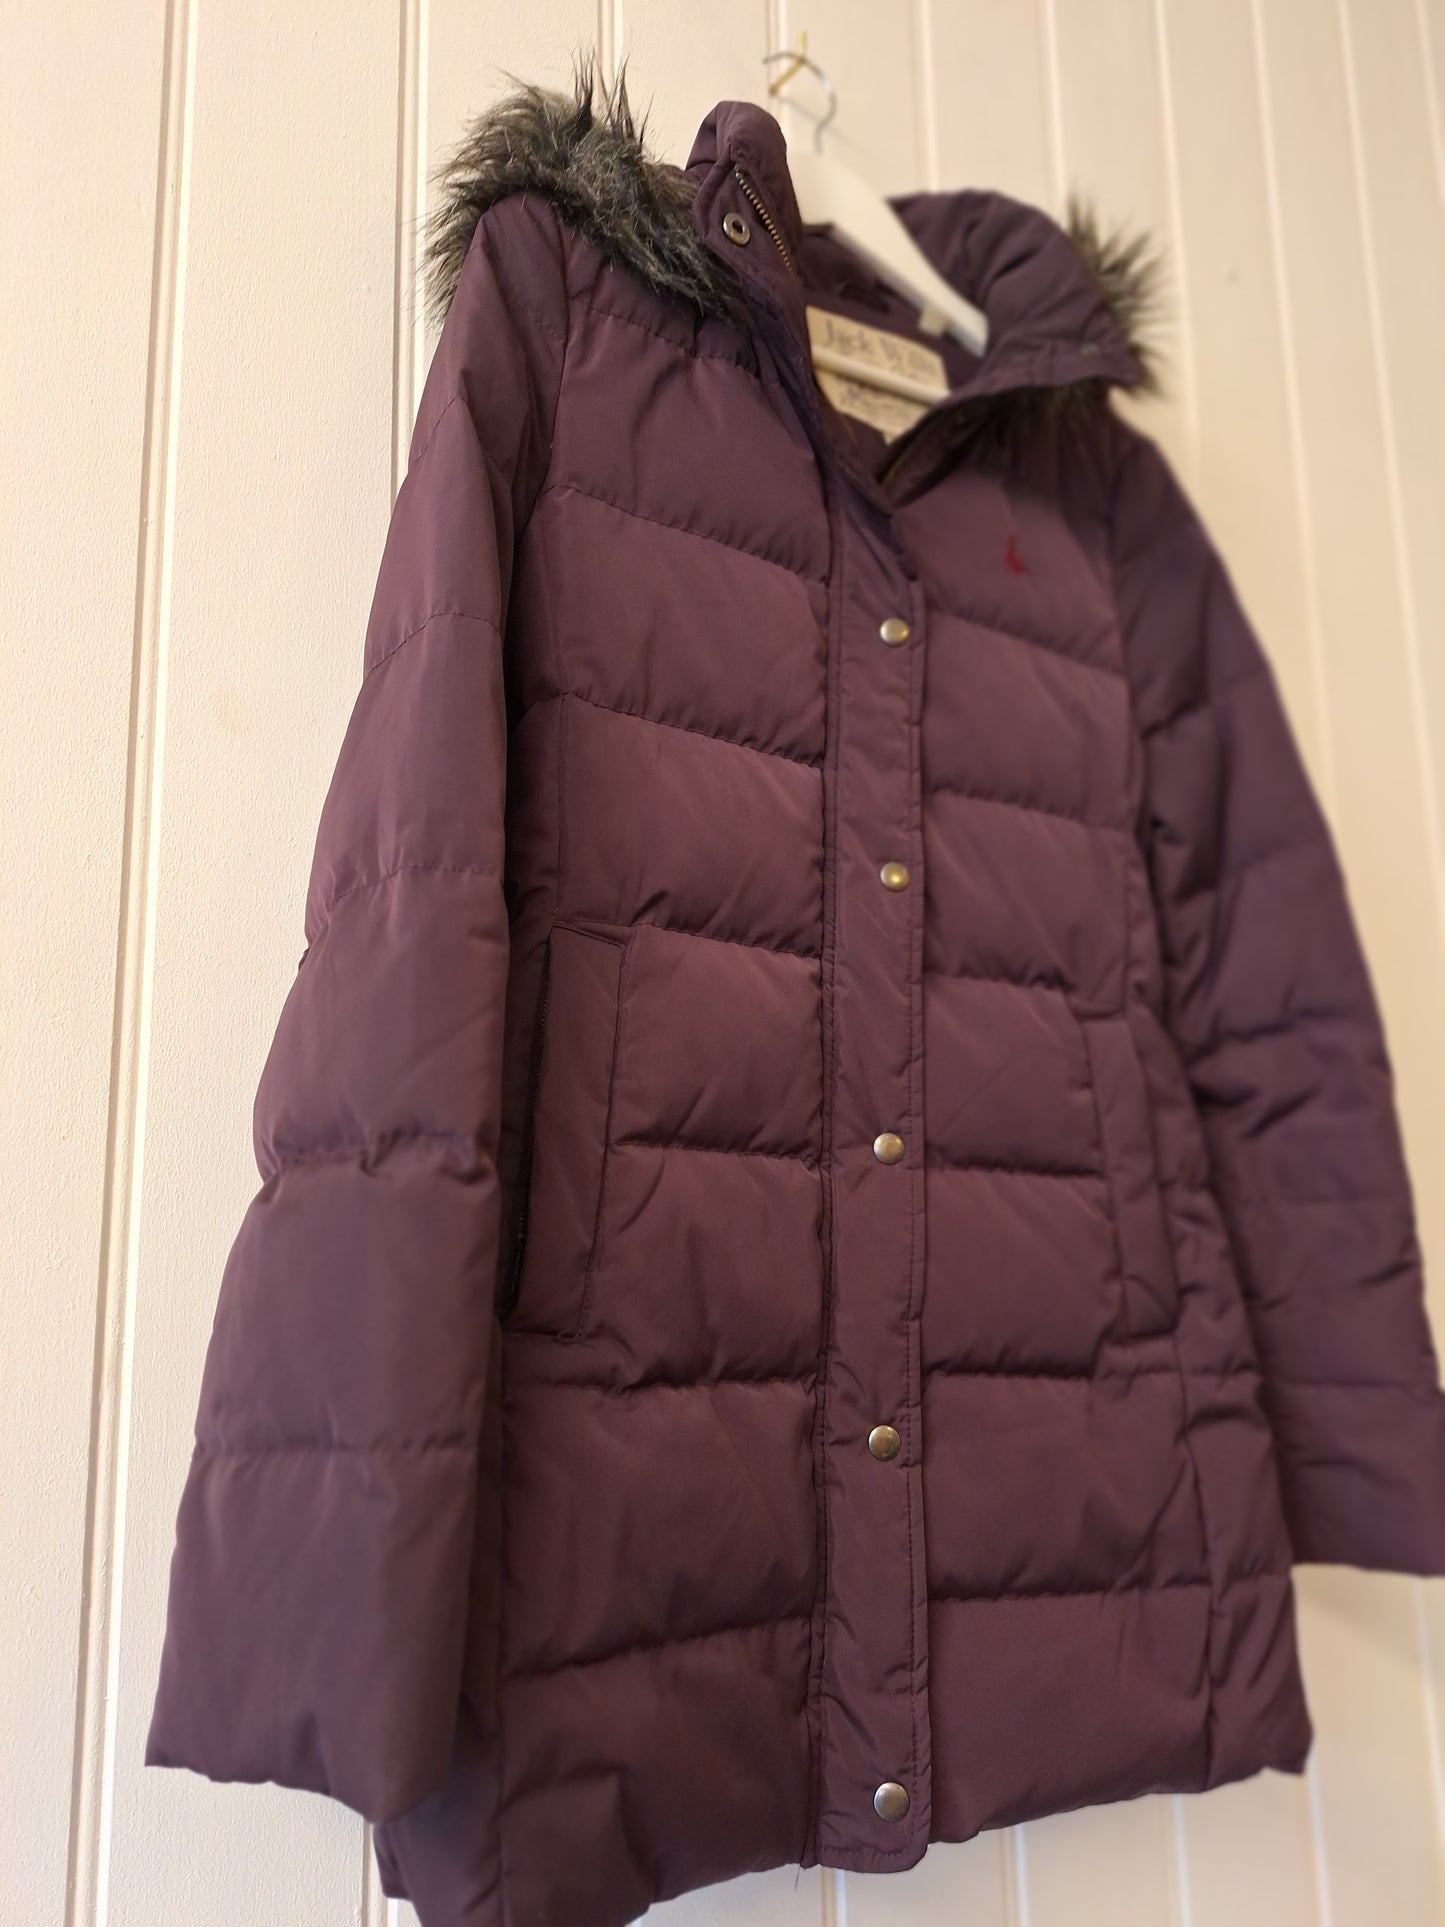 Jack Wills purple parka style coat 10